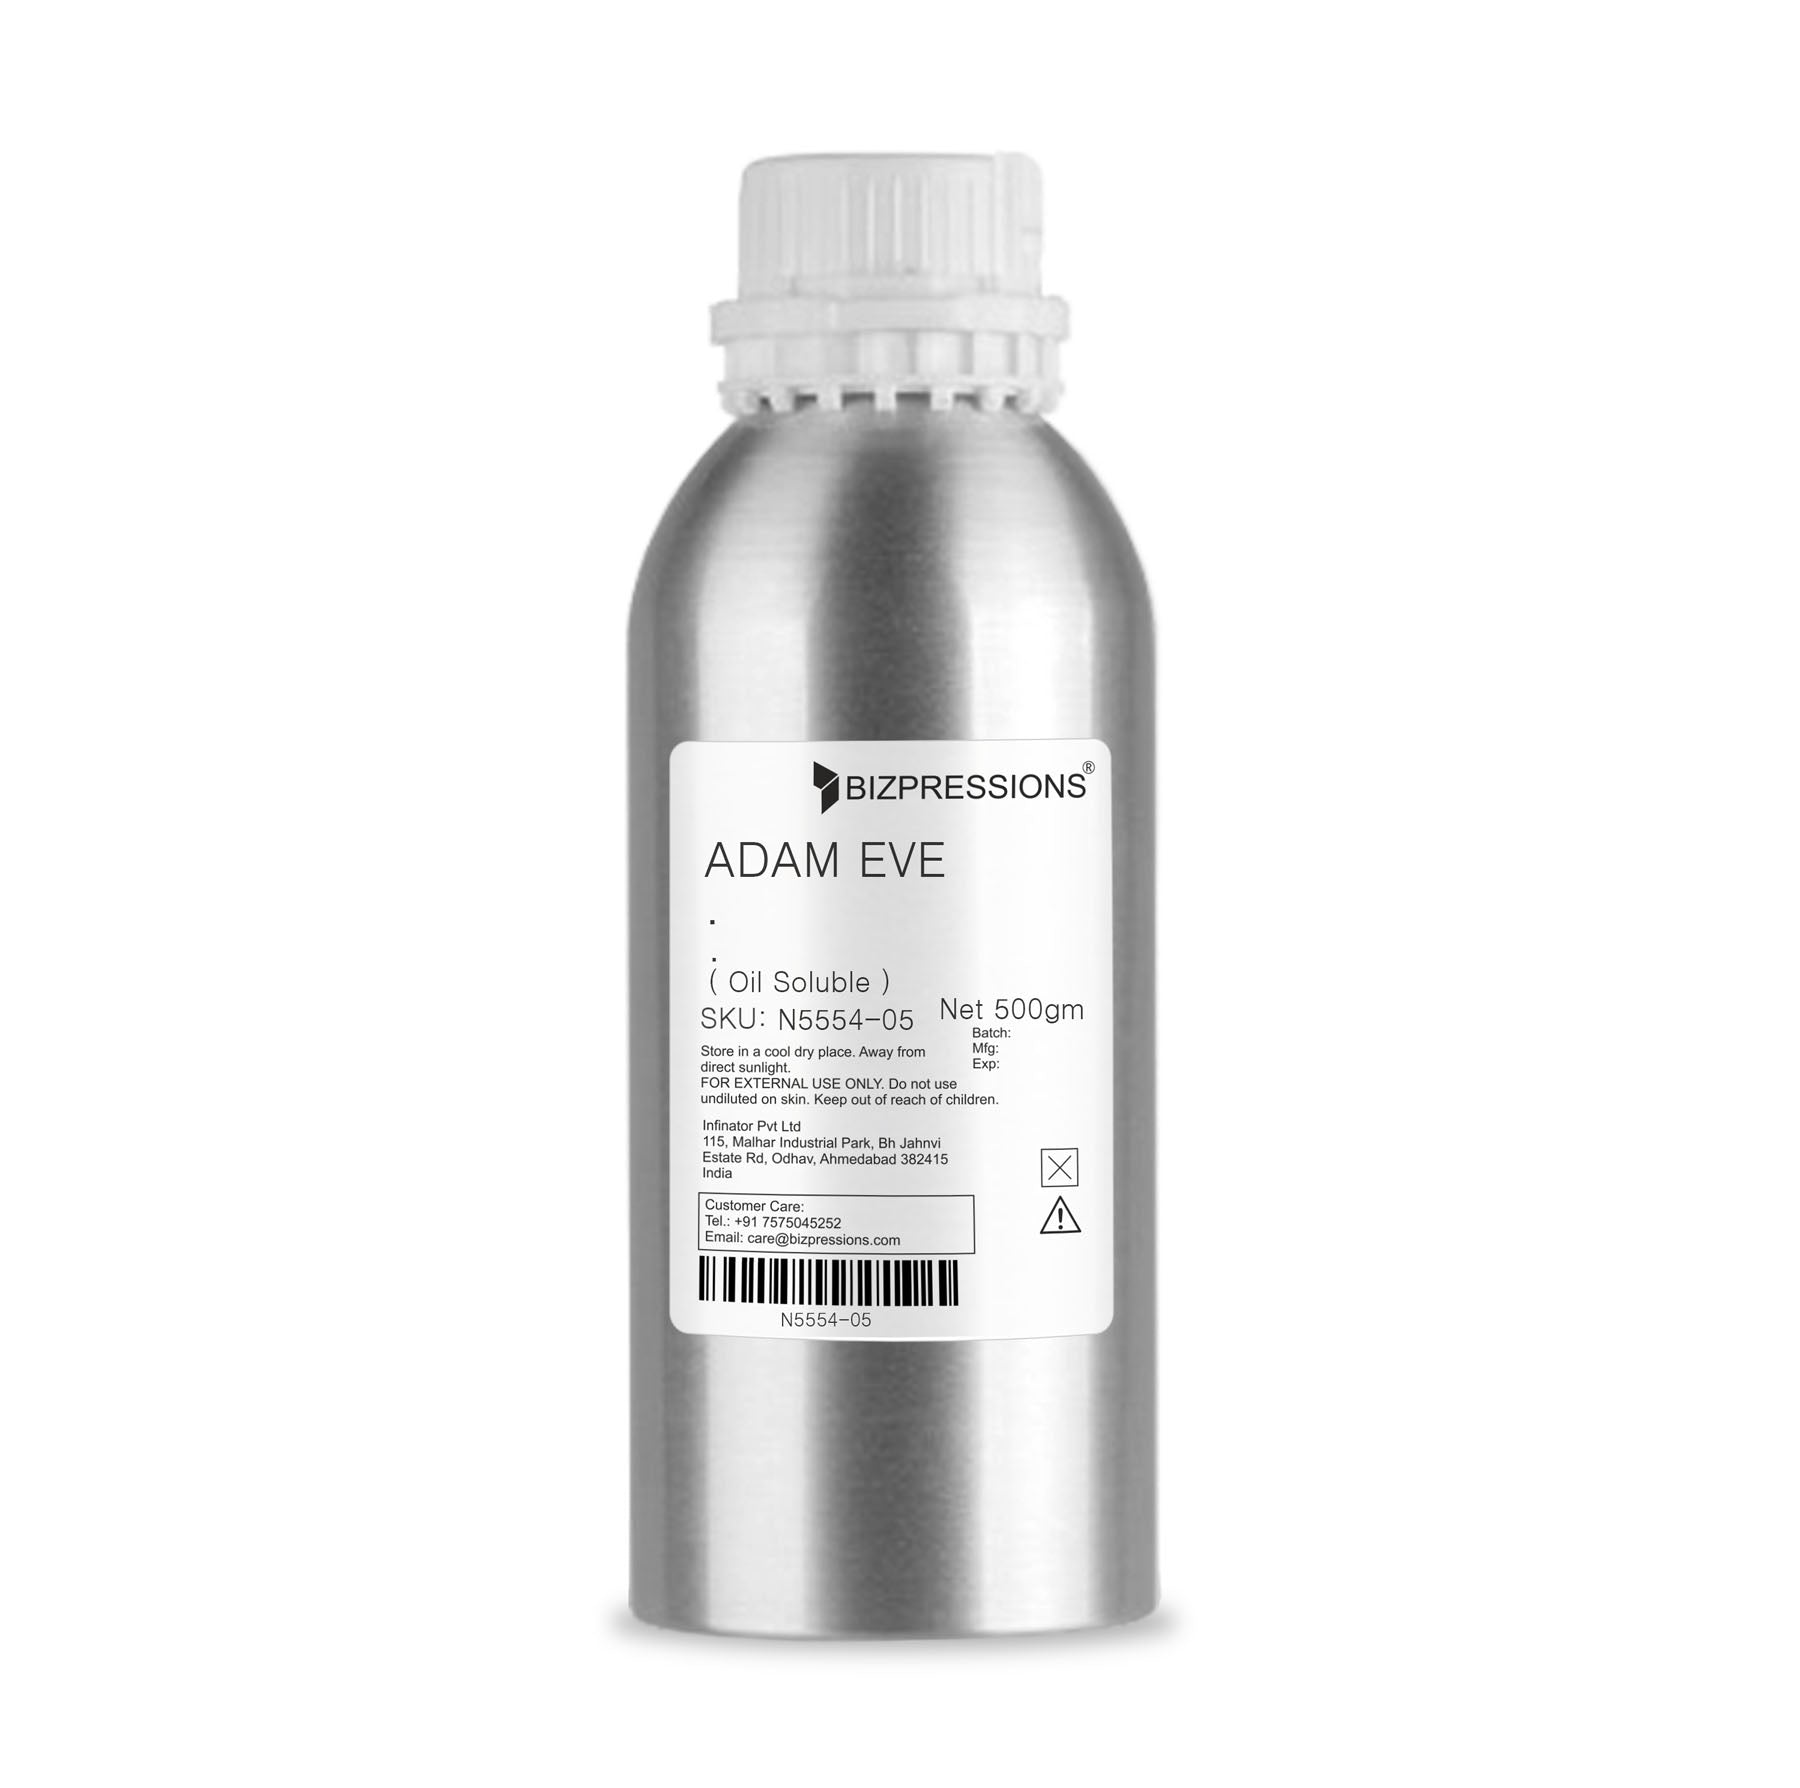 ADAM EVE - Fragrance ( Oil Soluble ) - 500 gm